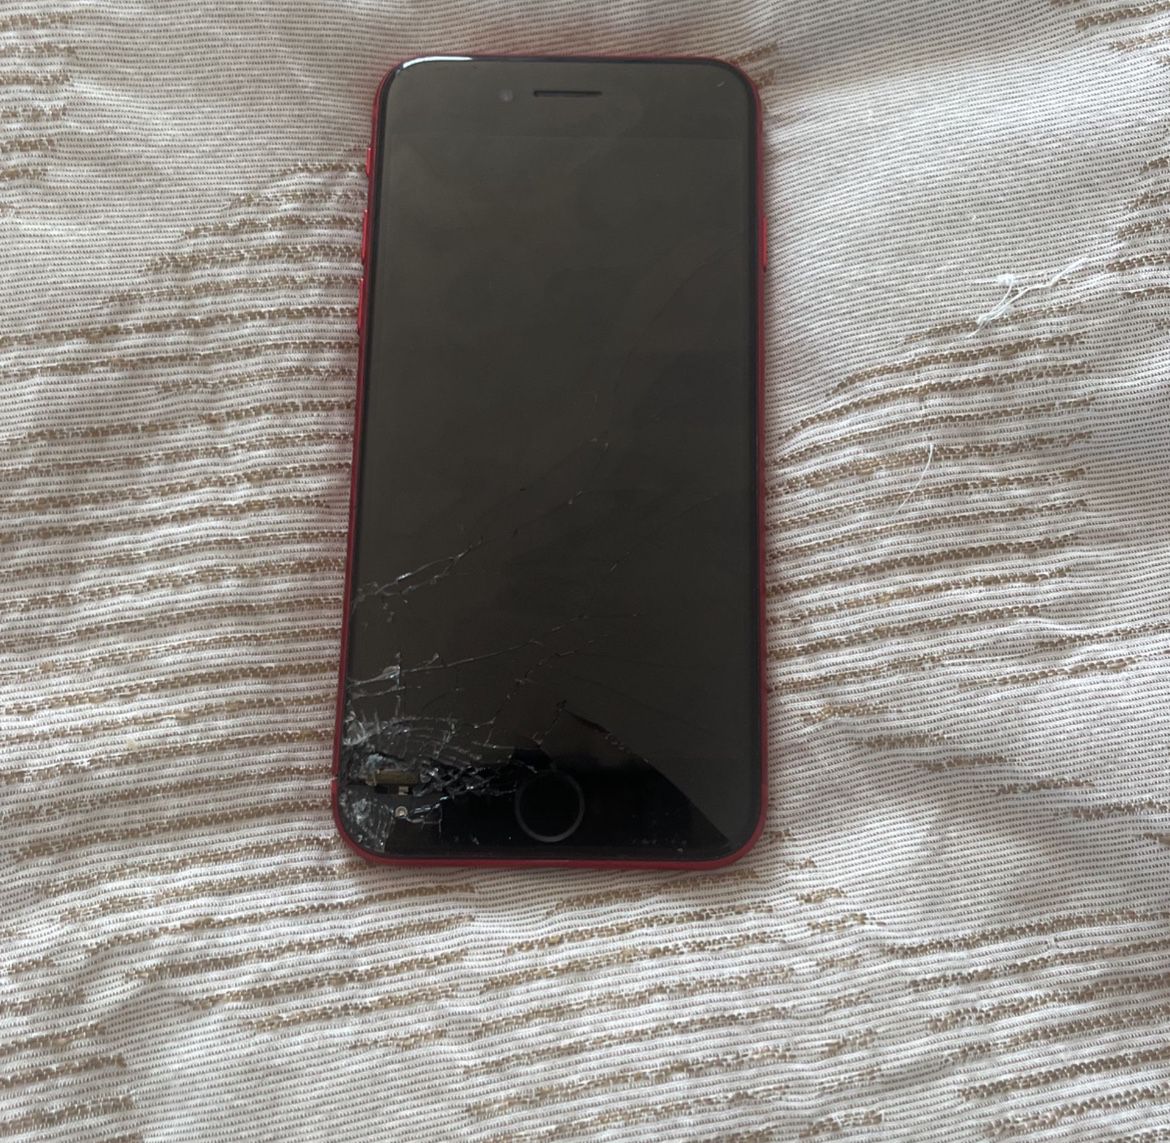 Iphone 8 (Repairable) Unlocked